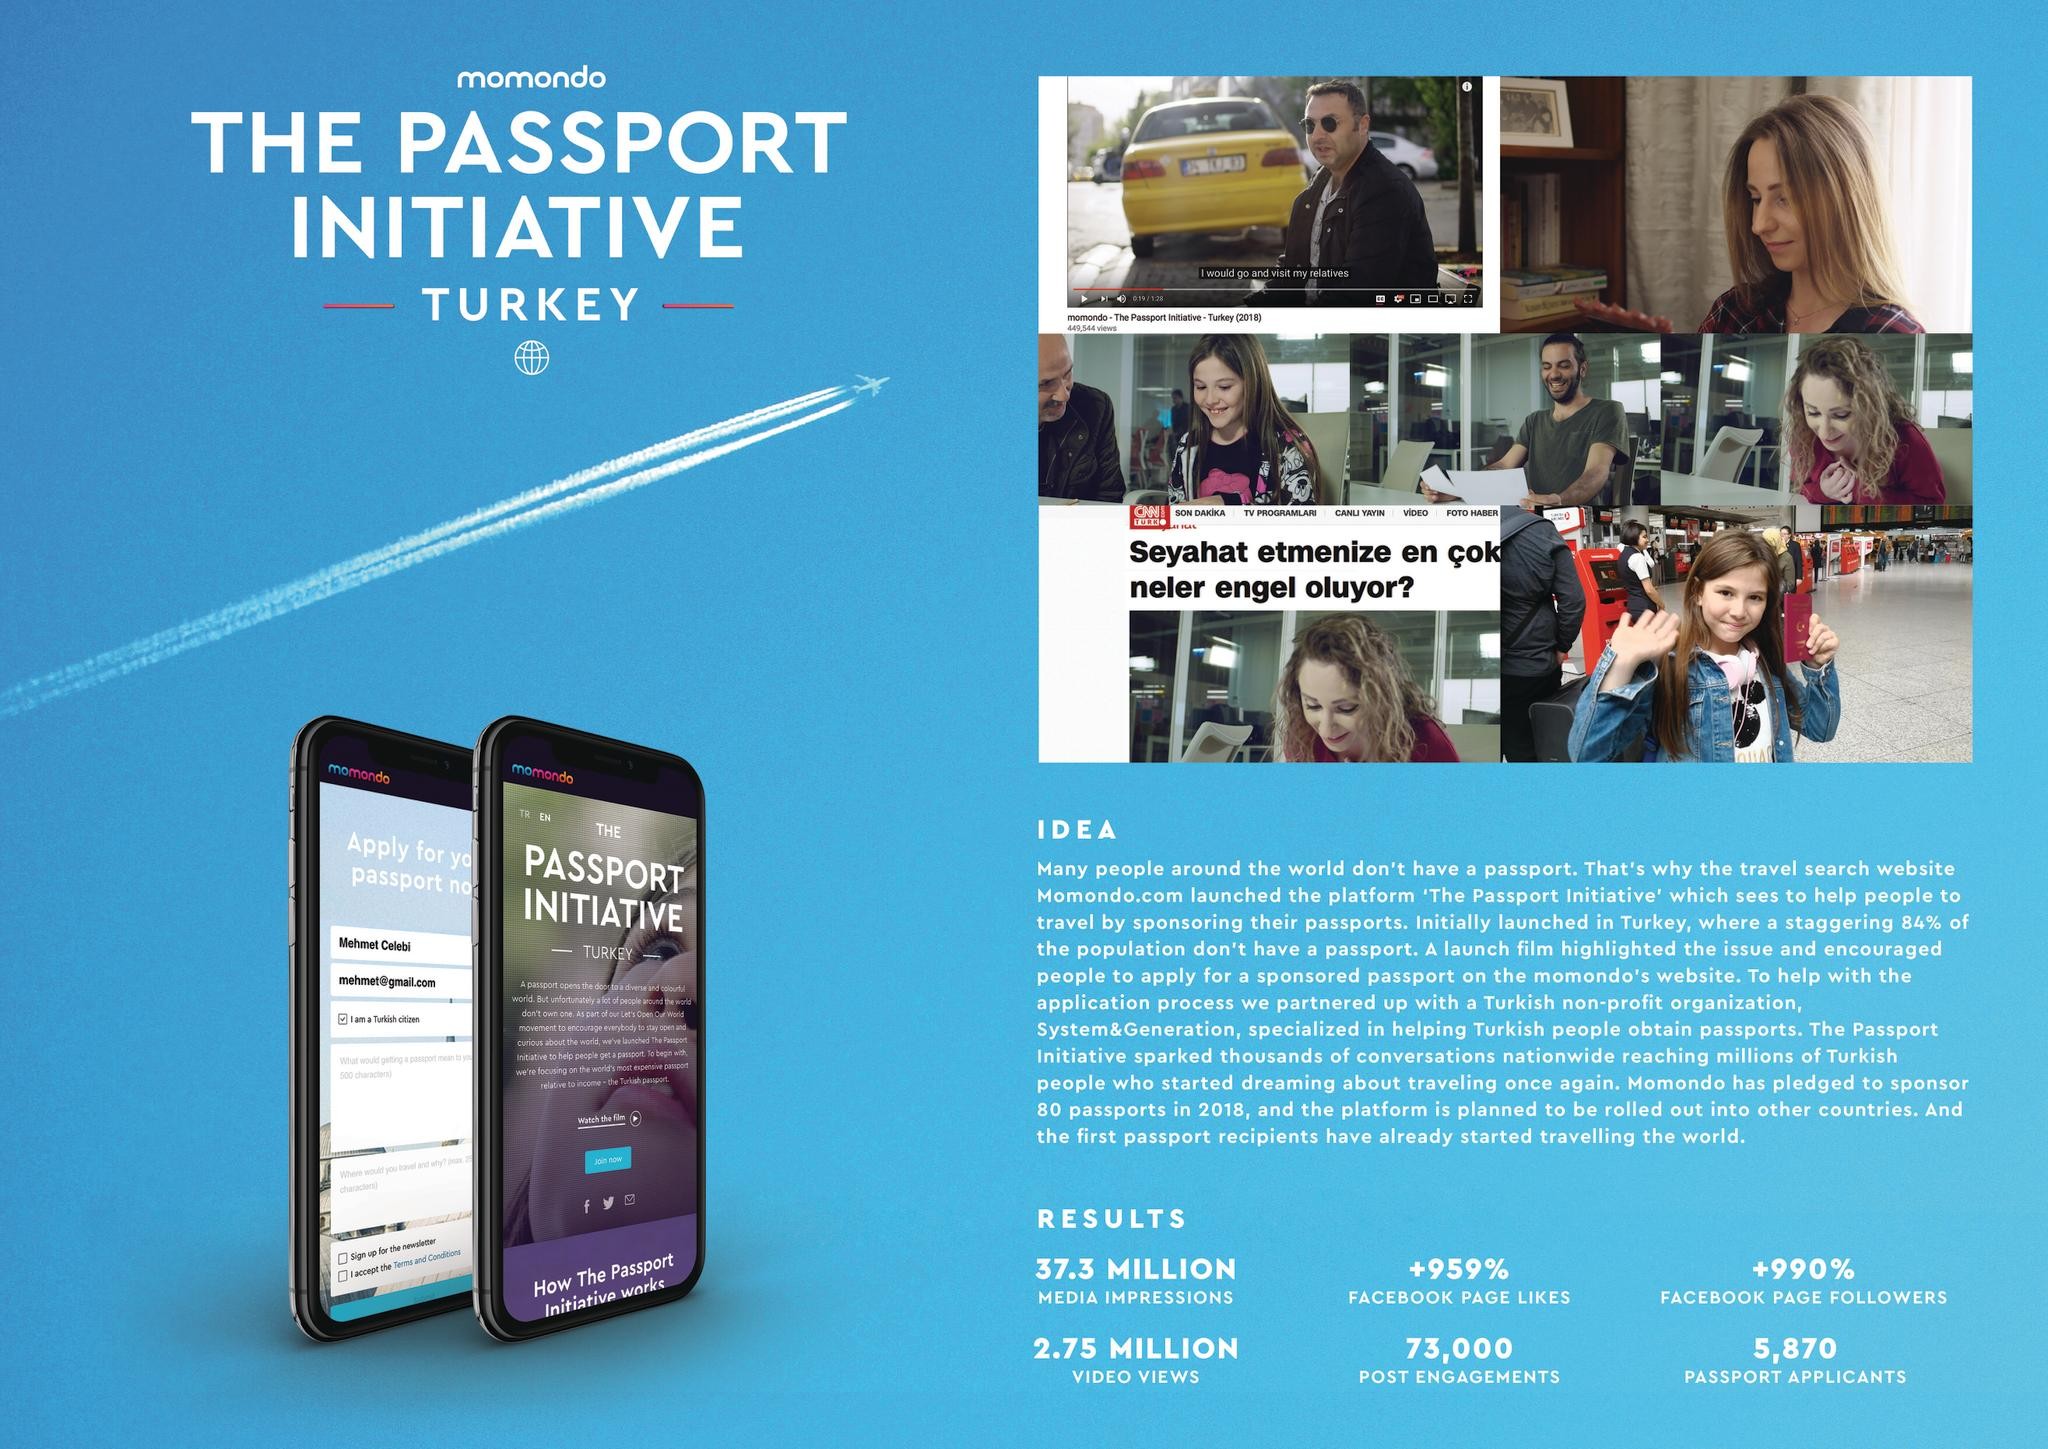 The Passport Initiative